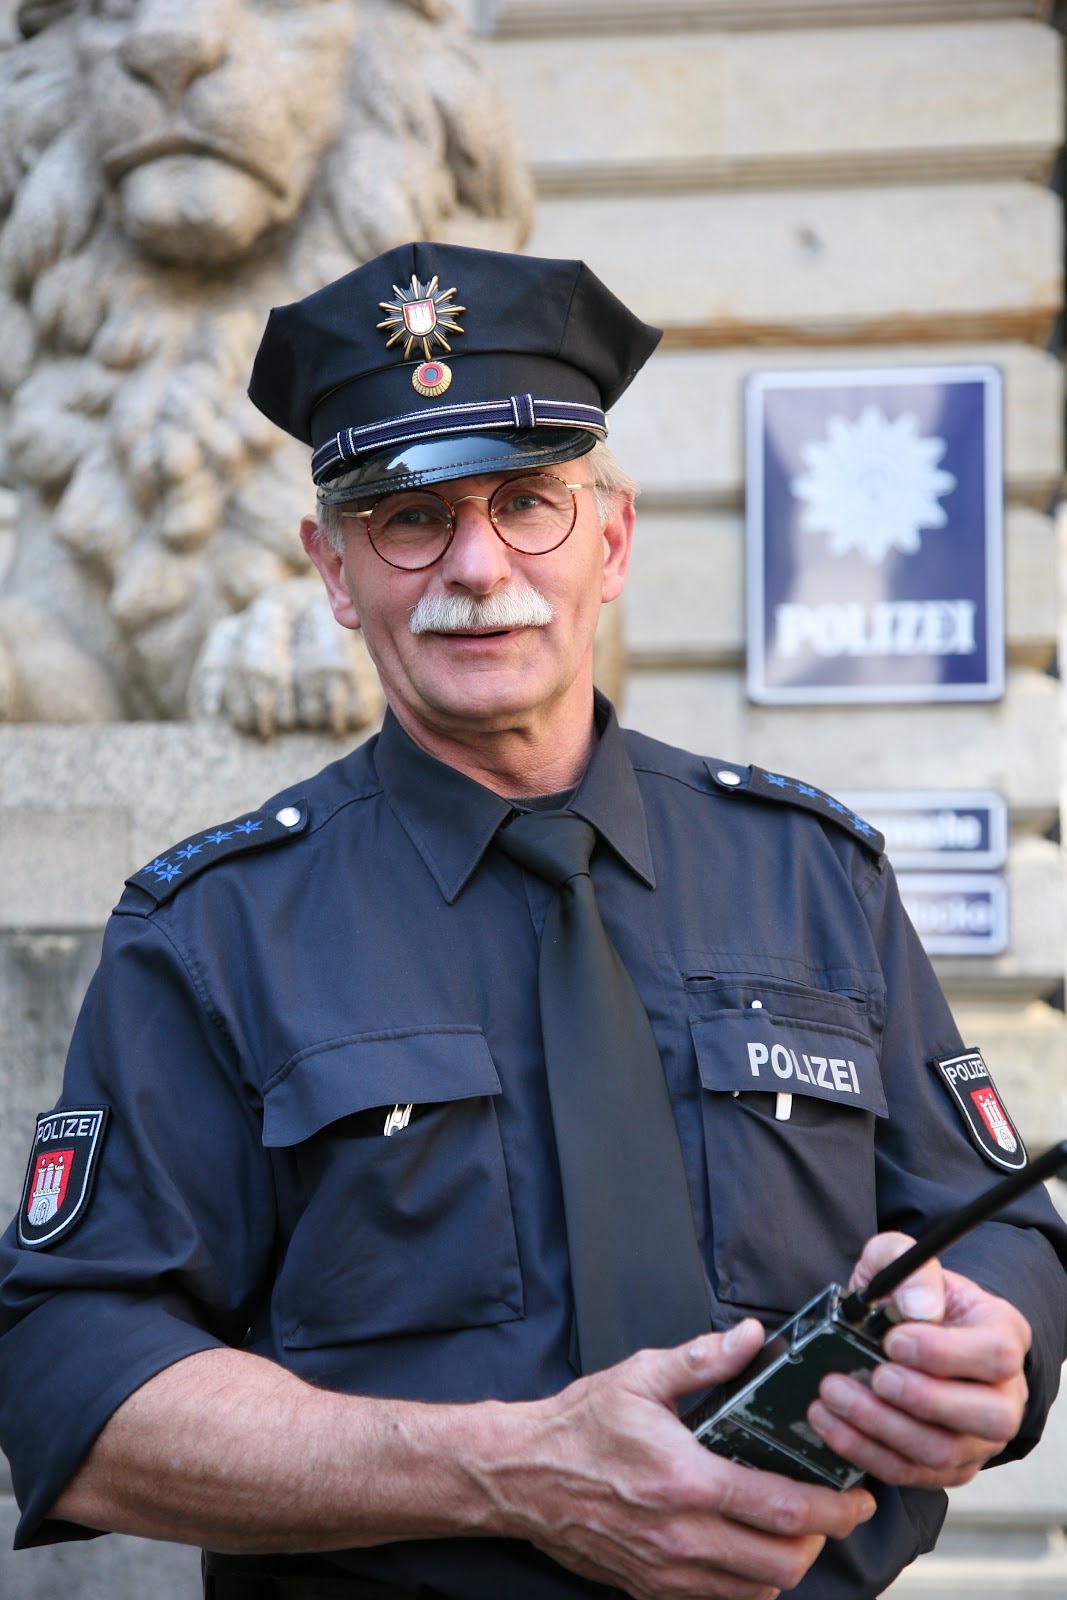 Police - Wikipedia